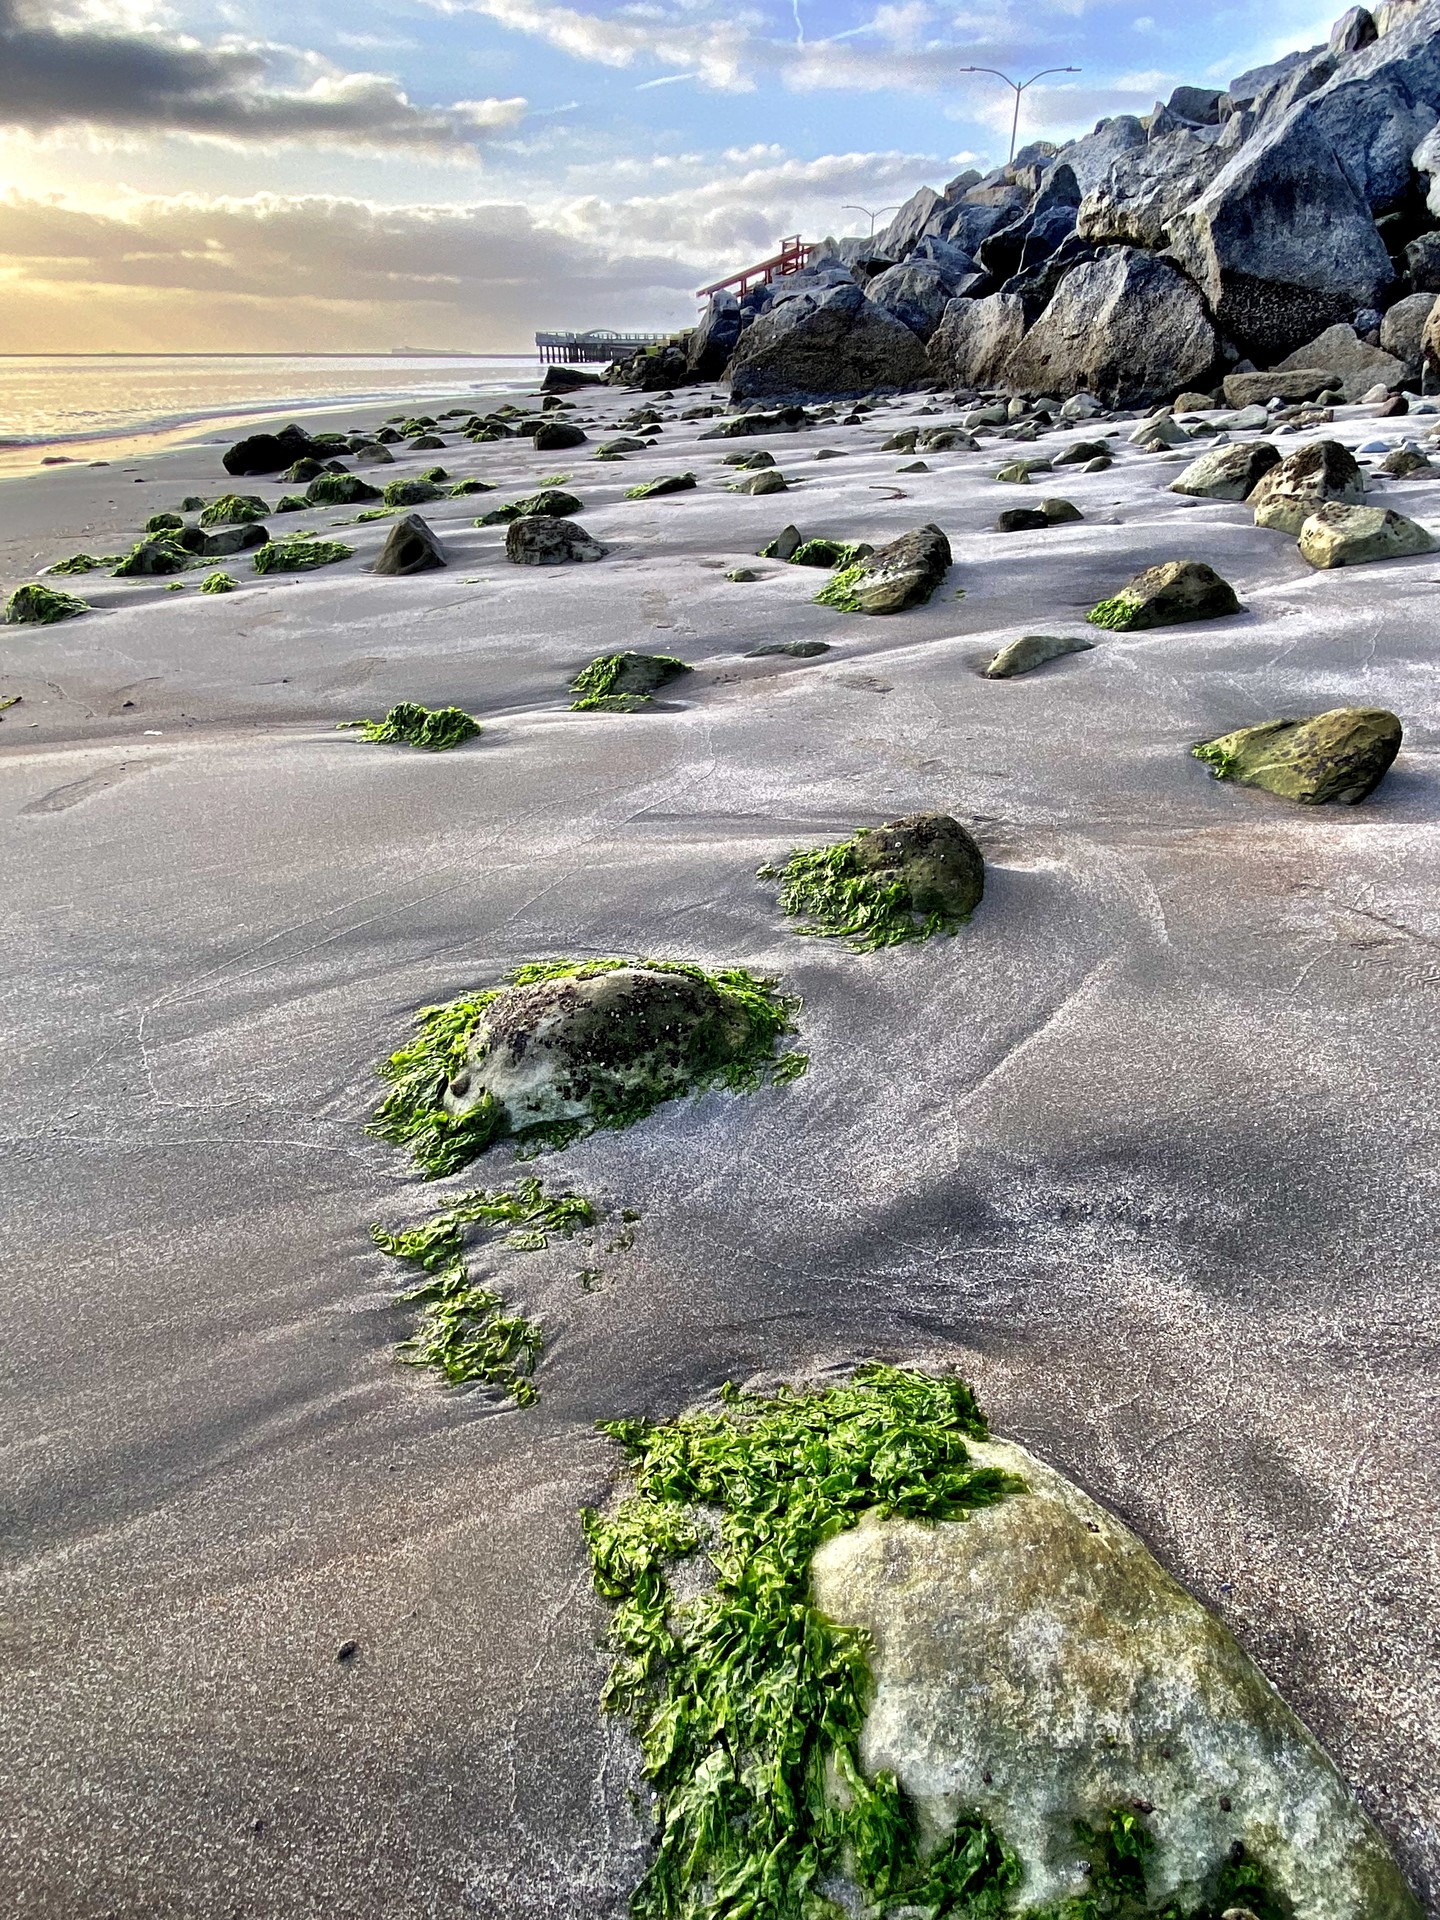 Rocks peek through the sand in a long view up the beach